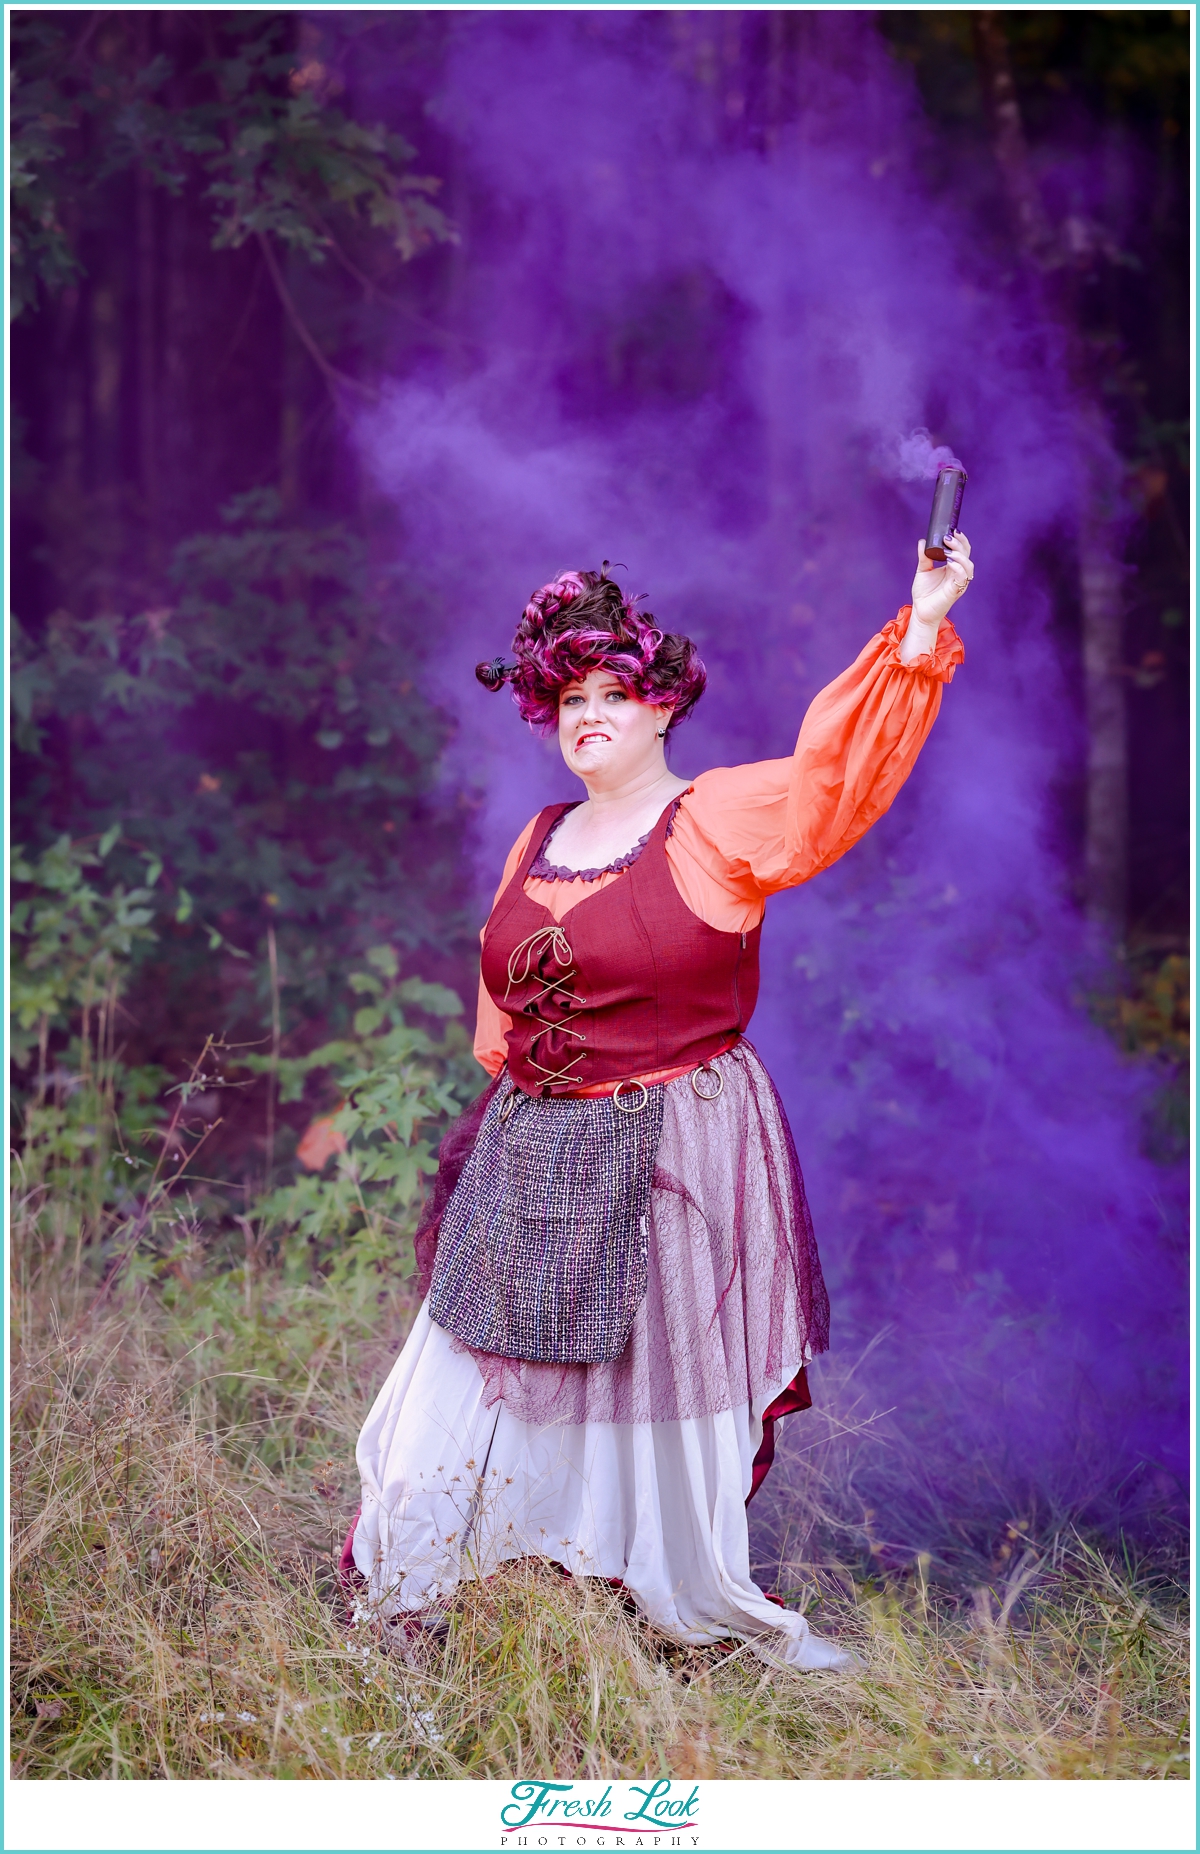 Smoke Bomb witch costume